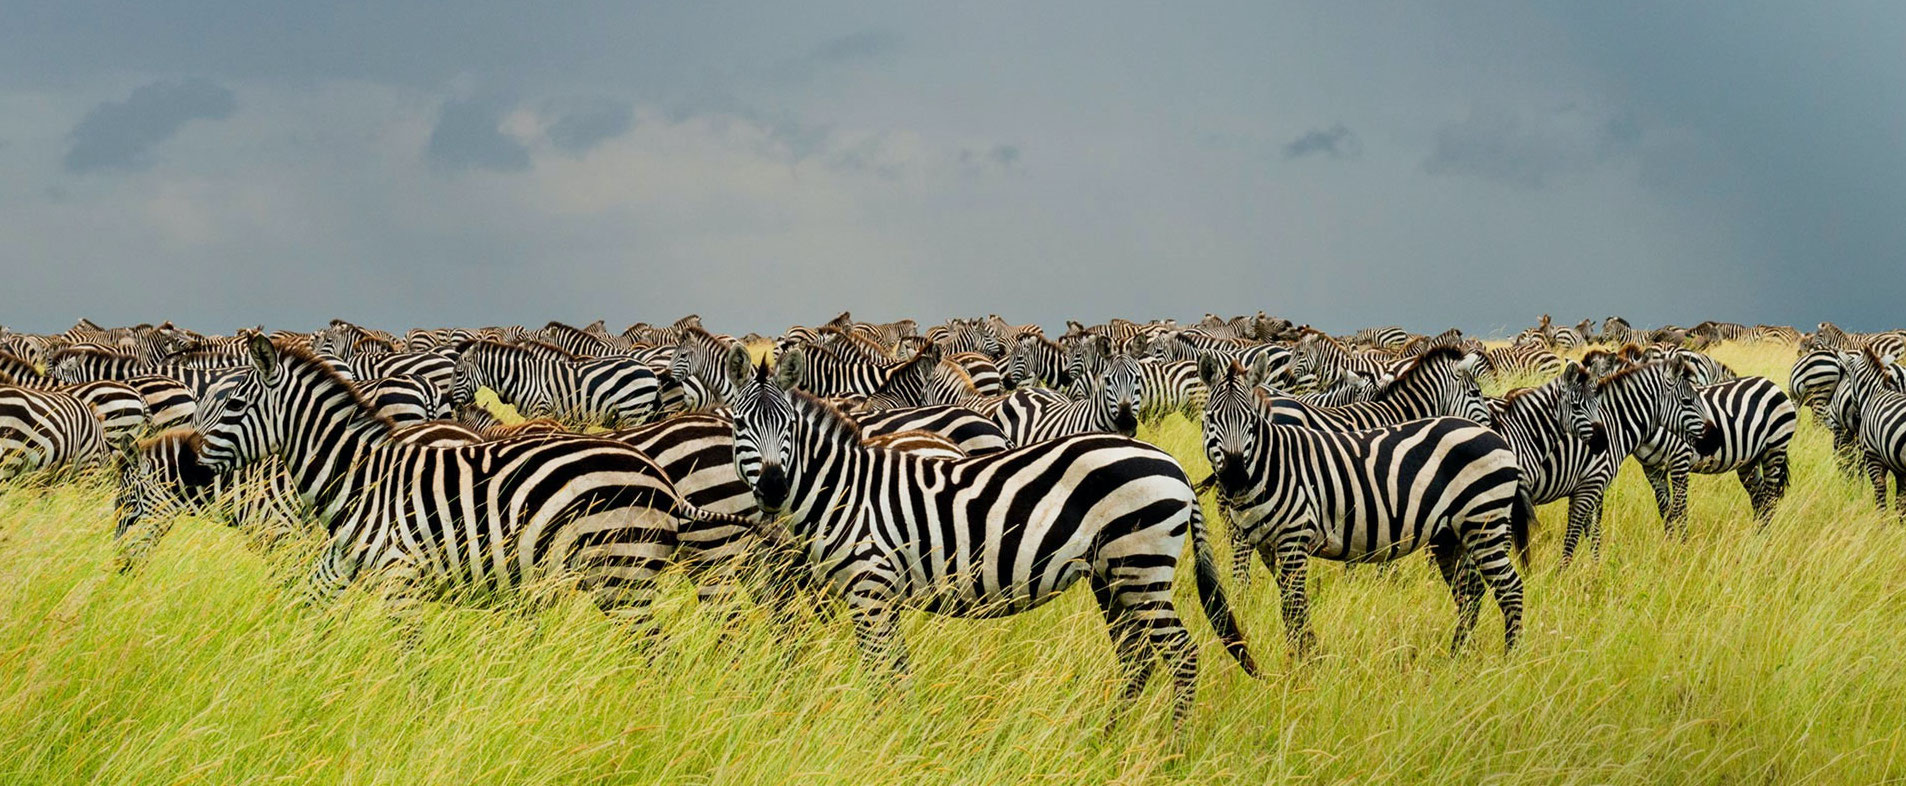 Tanzania Destinations | Tanzania National Parks